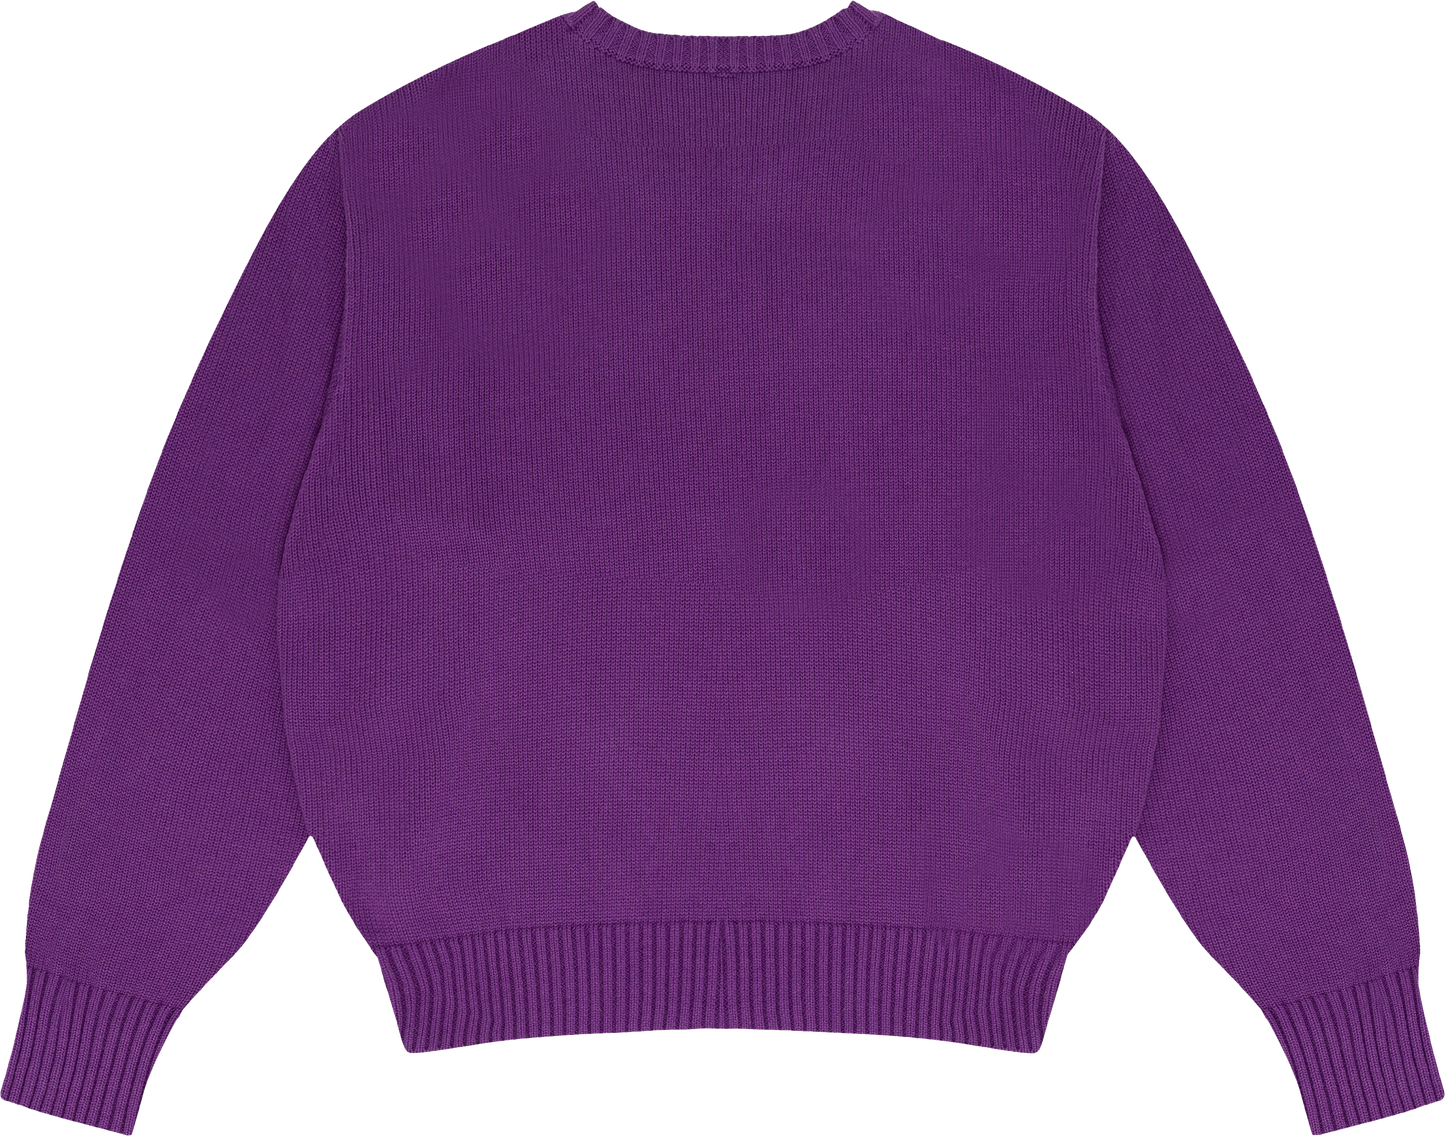 'Tyson Beckford Sweater' PURPLE